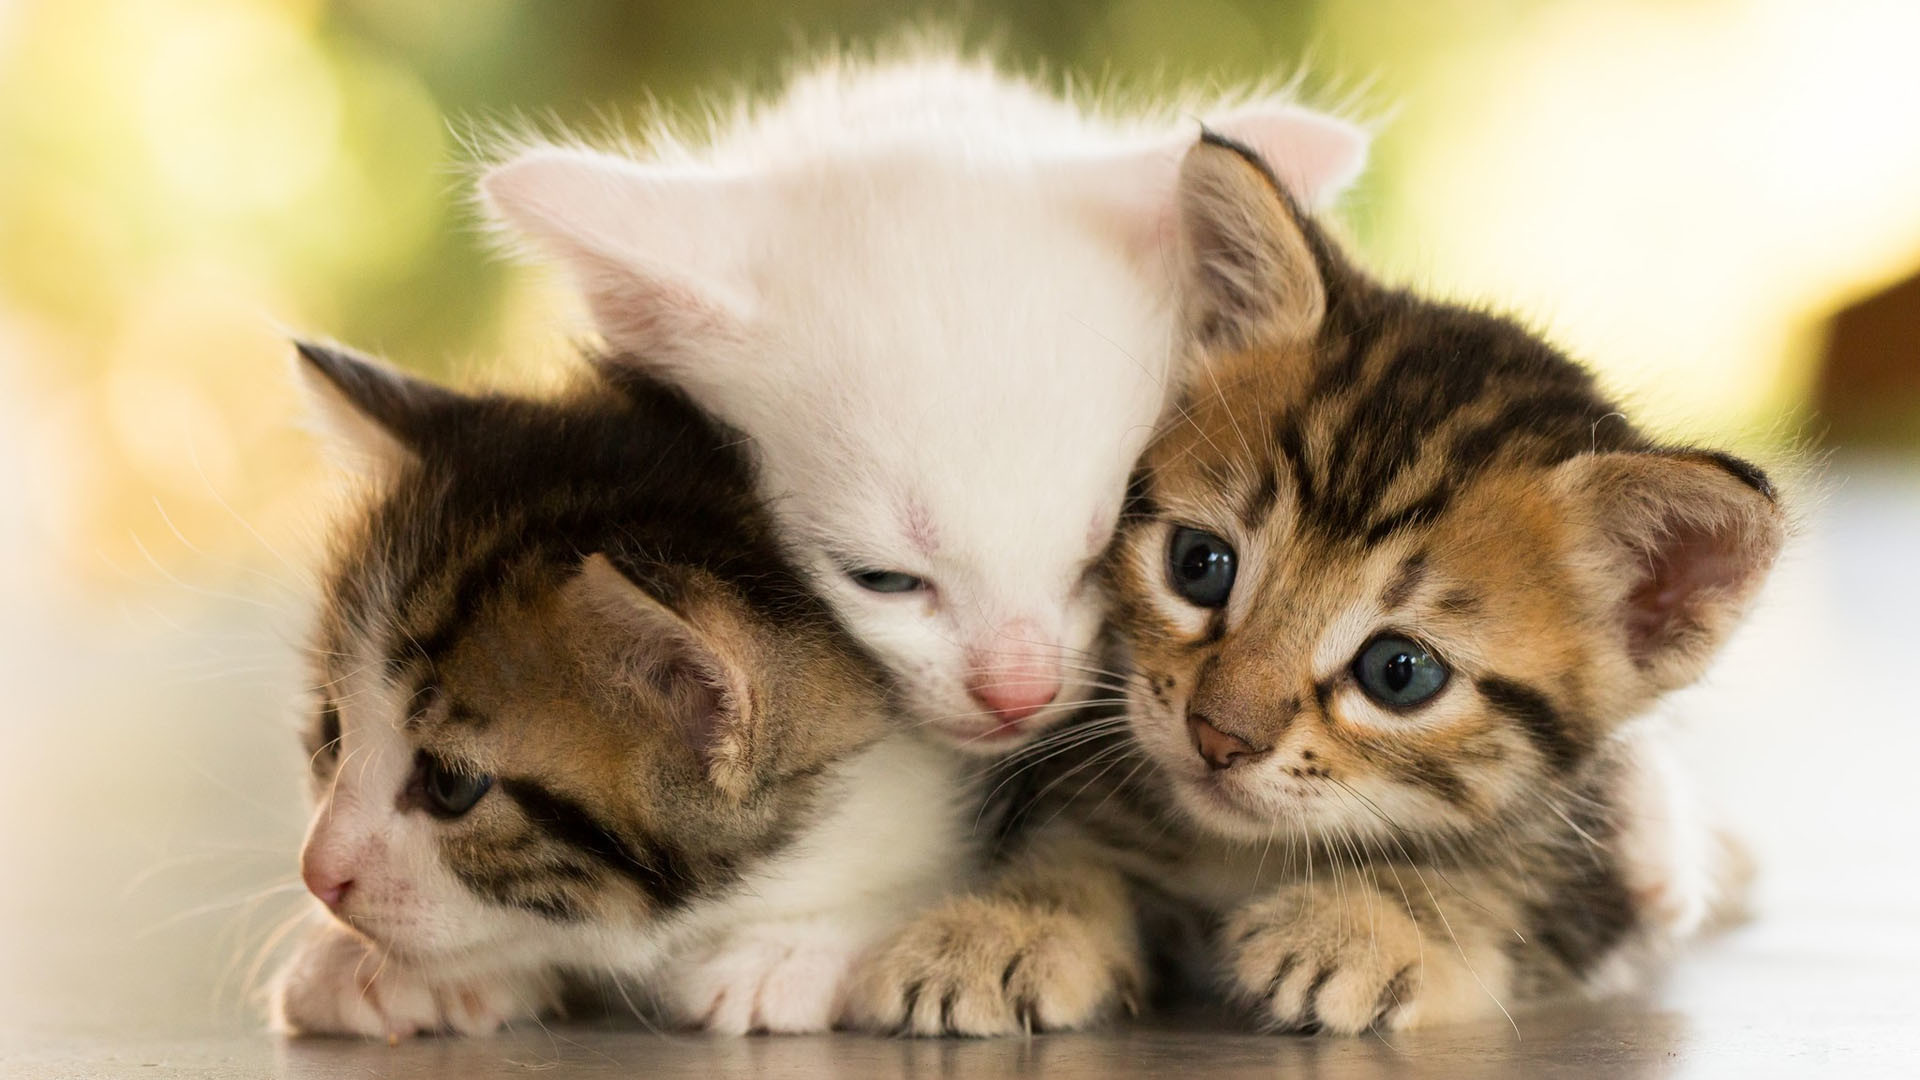 1920x1080 Download Fullsize Image Â· Cute-Baby-Cats-Wallpaper-